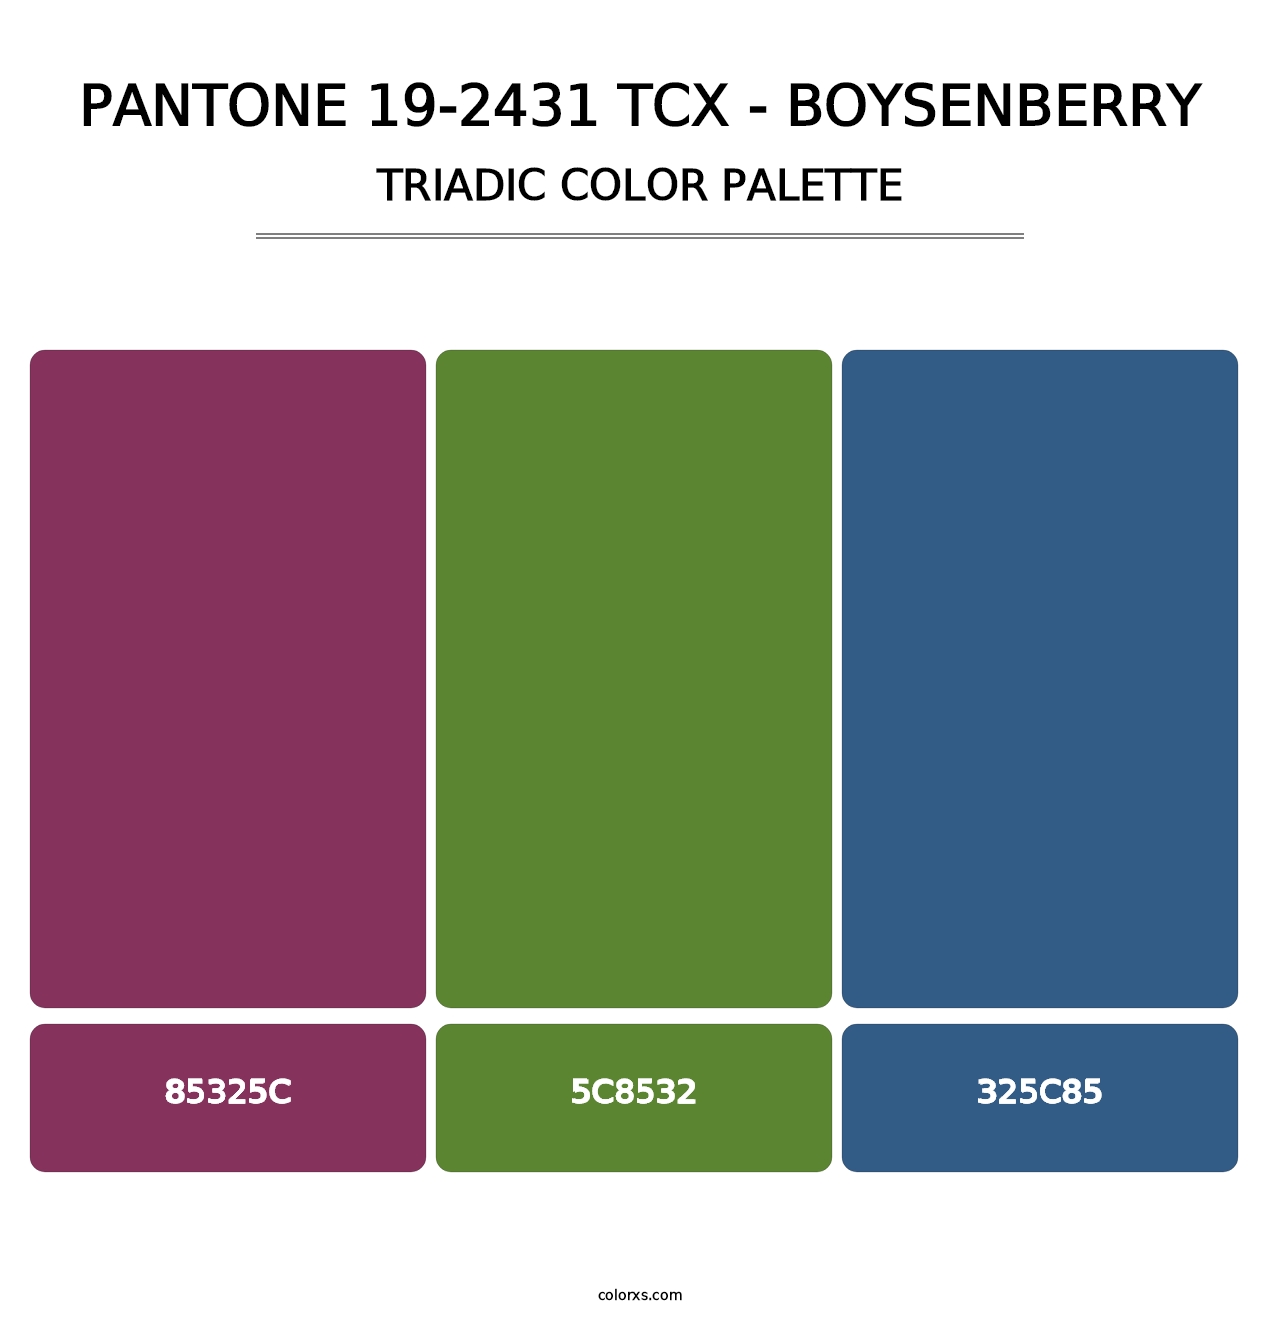 PANTONE 19-2431 TCX - Boysenberry - Triadic Color Palette